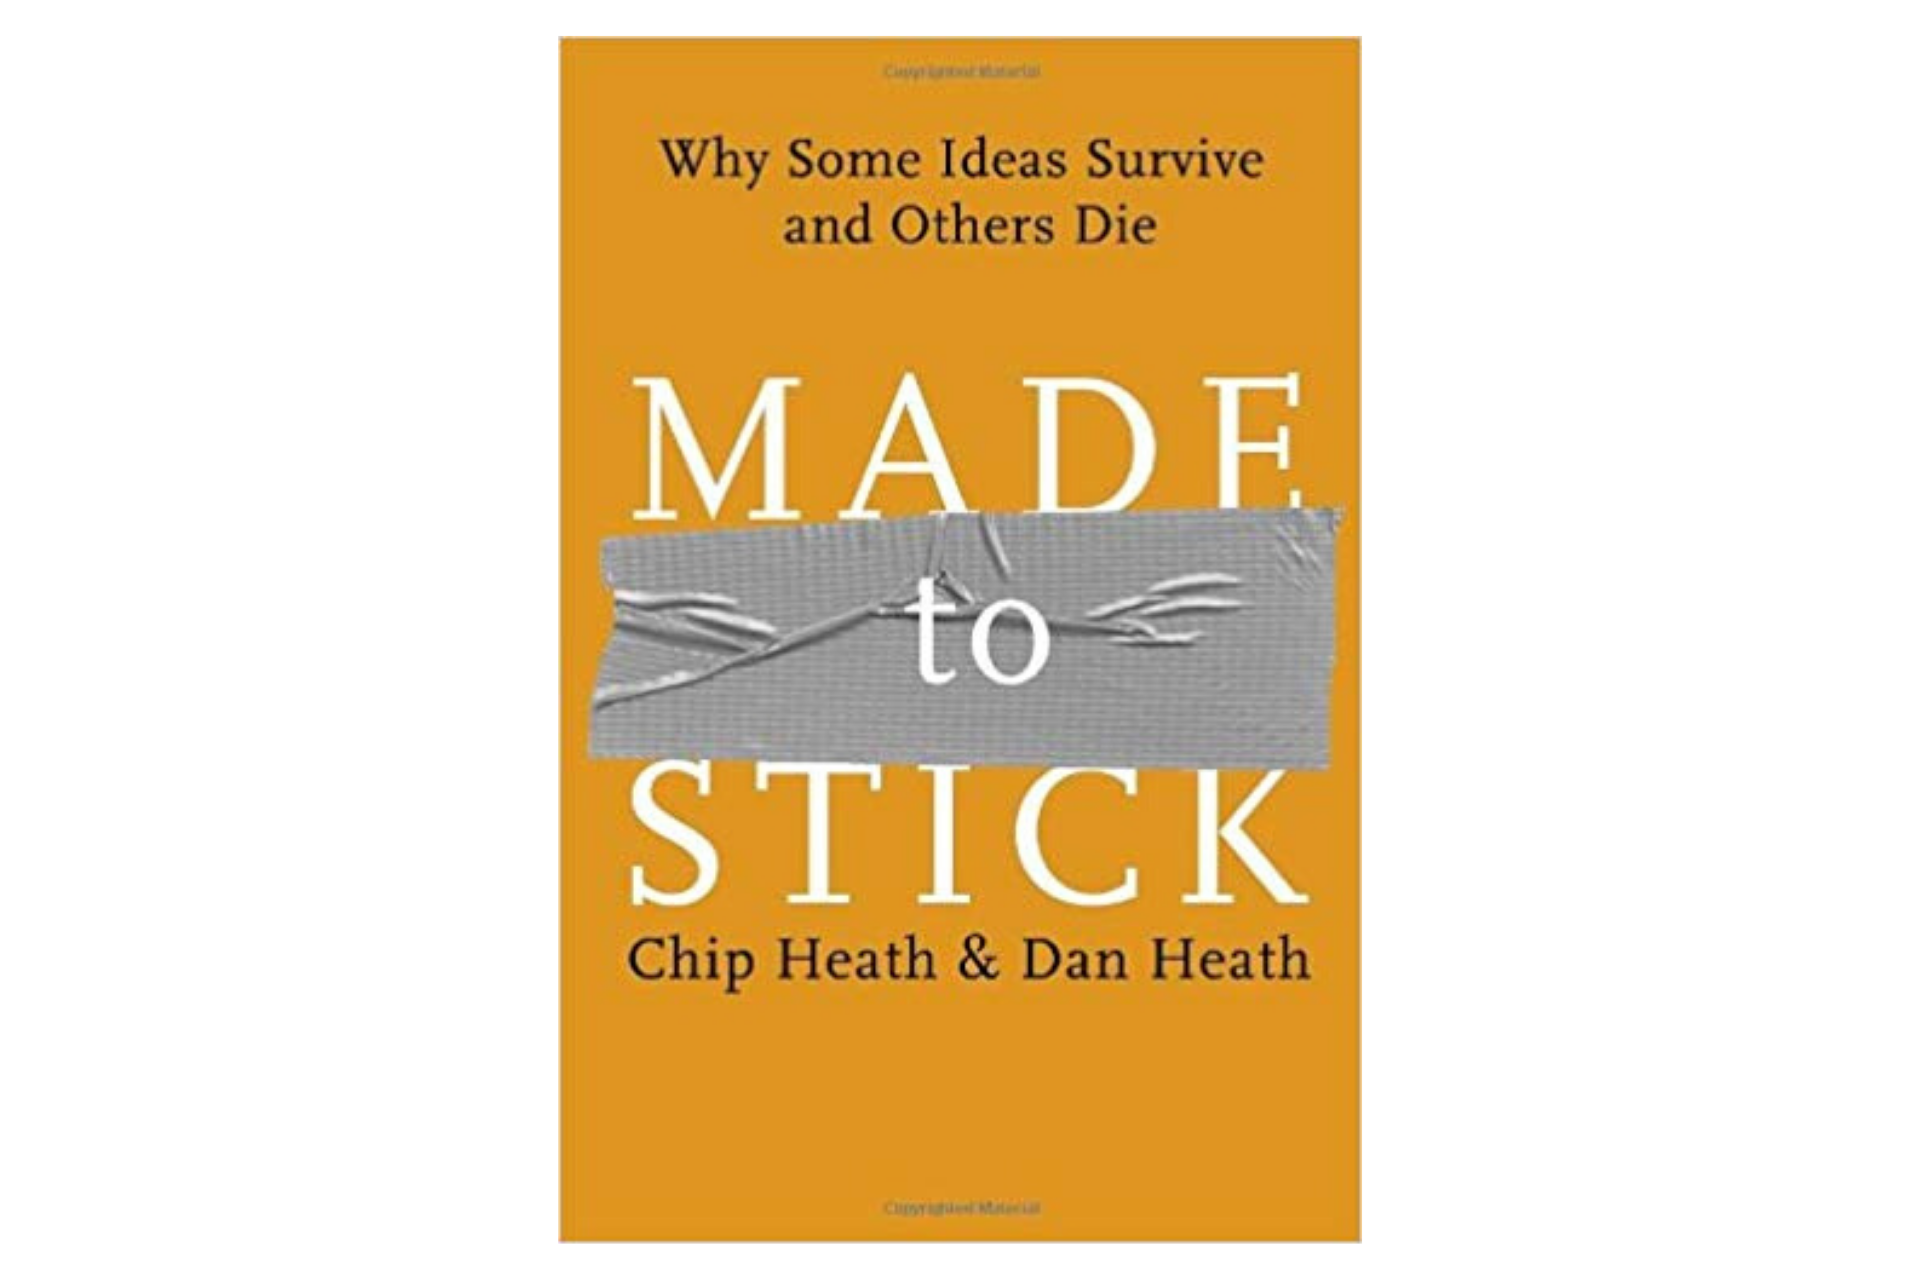 Made to Stick by Chip & Dan Heath